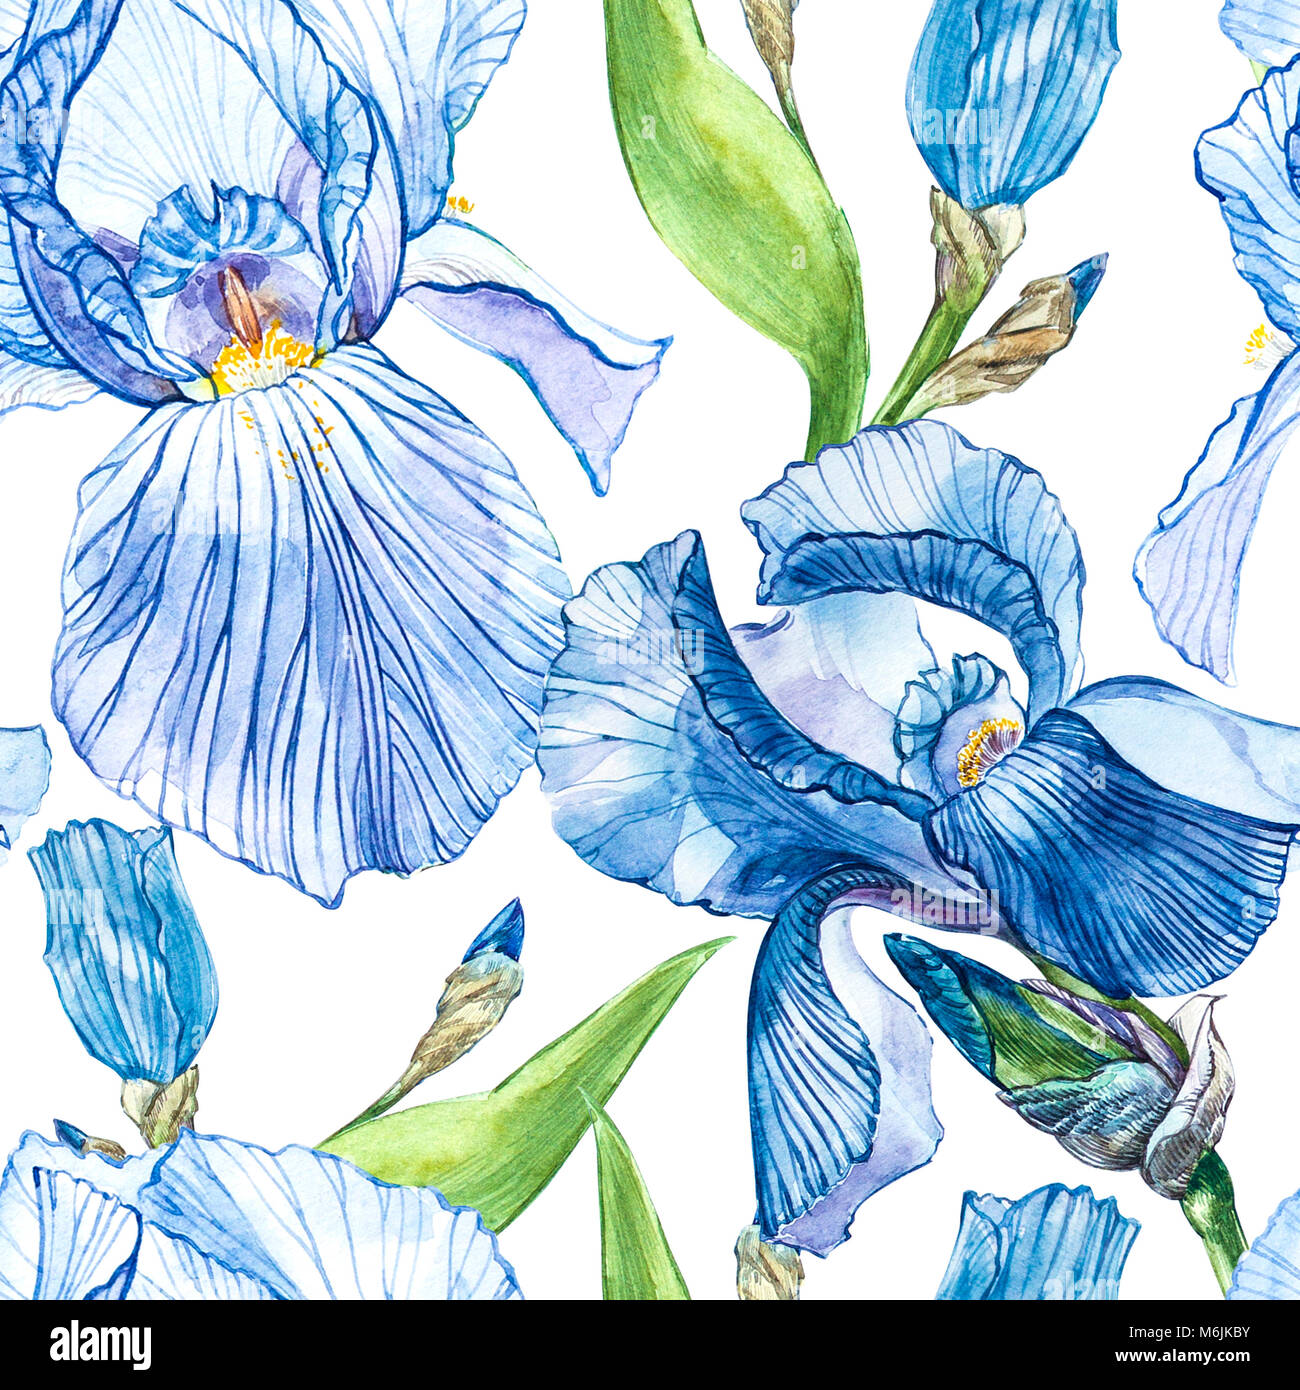 Iris Flower Drawing Stock Photos & Iris Flower Drawing Stock Images - Alamy